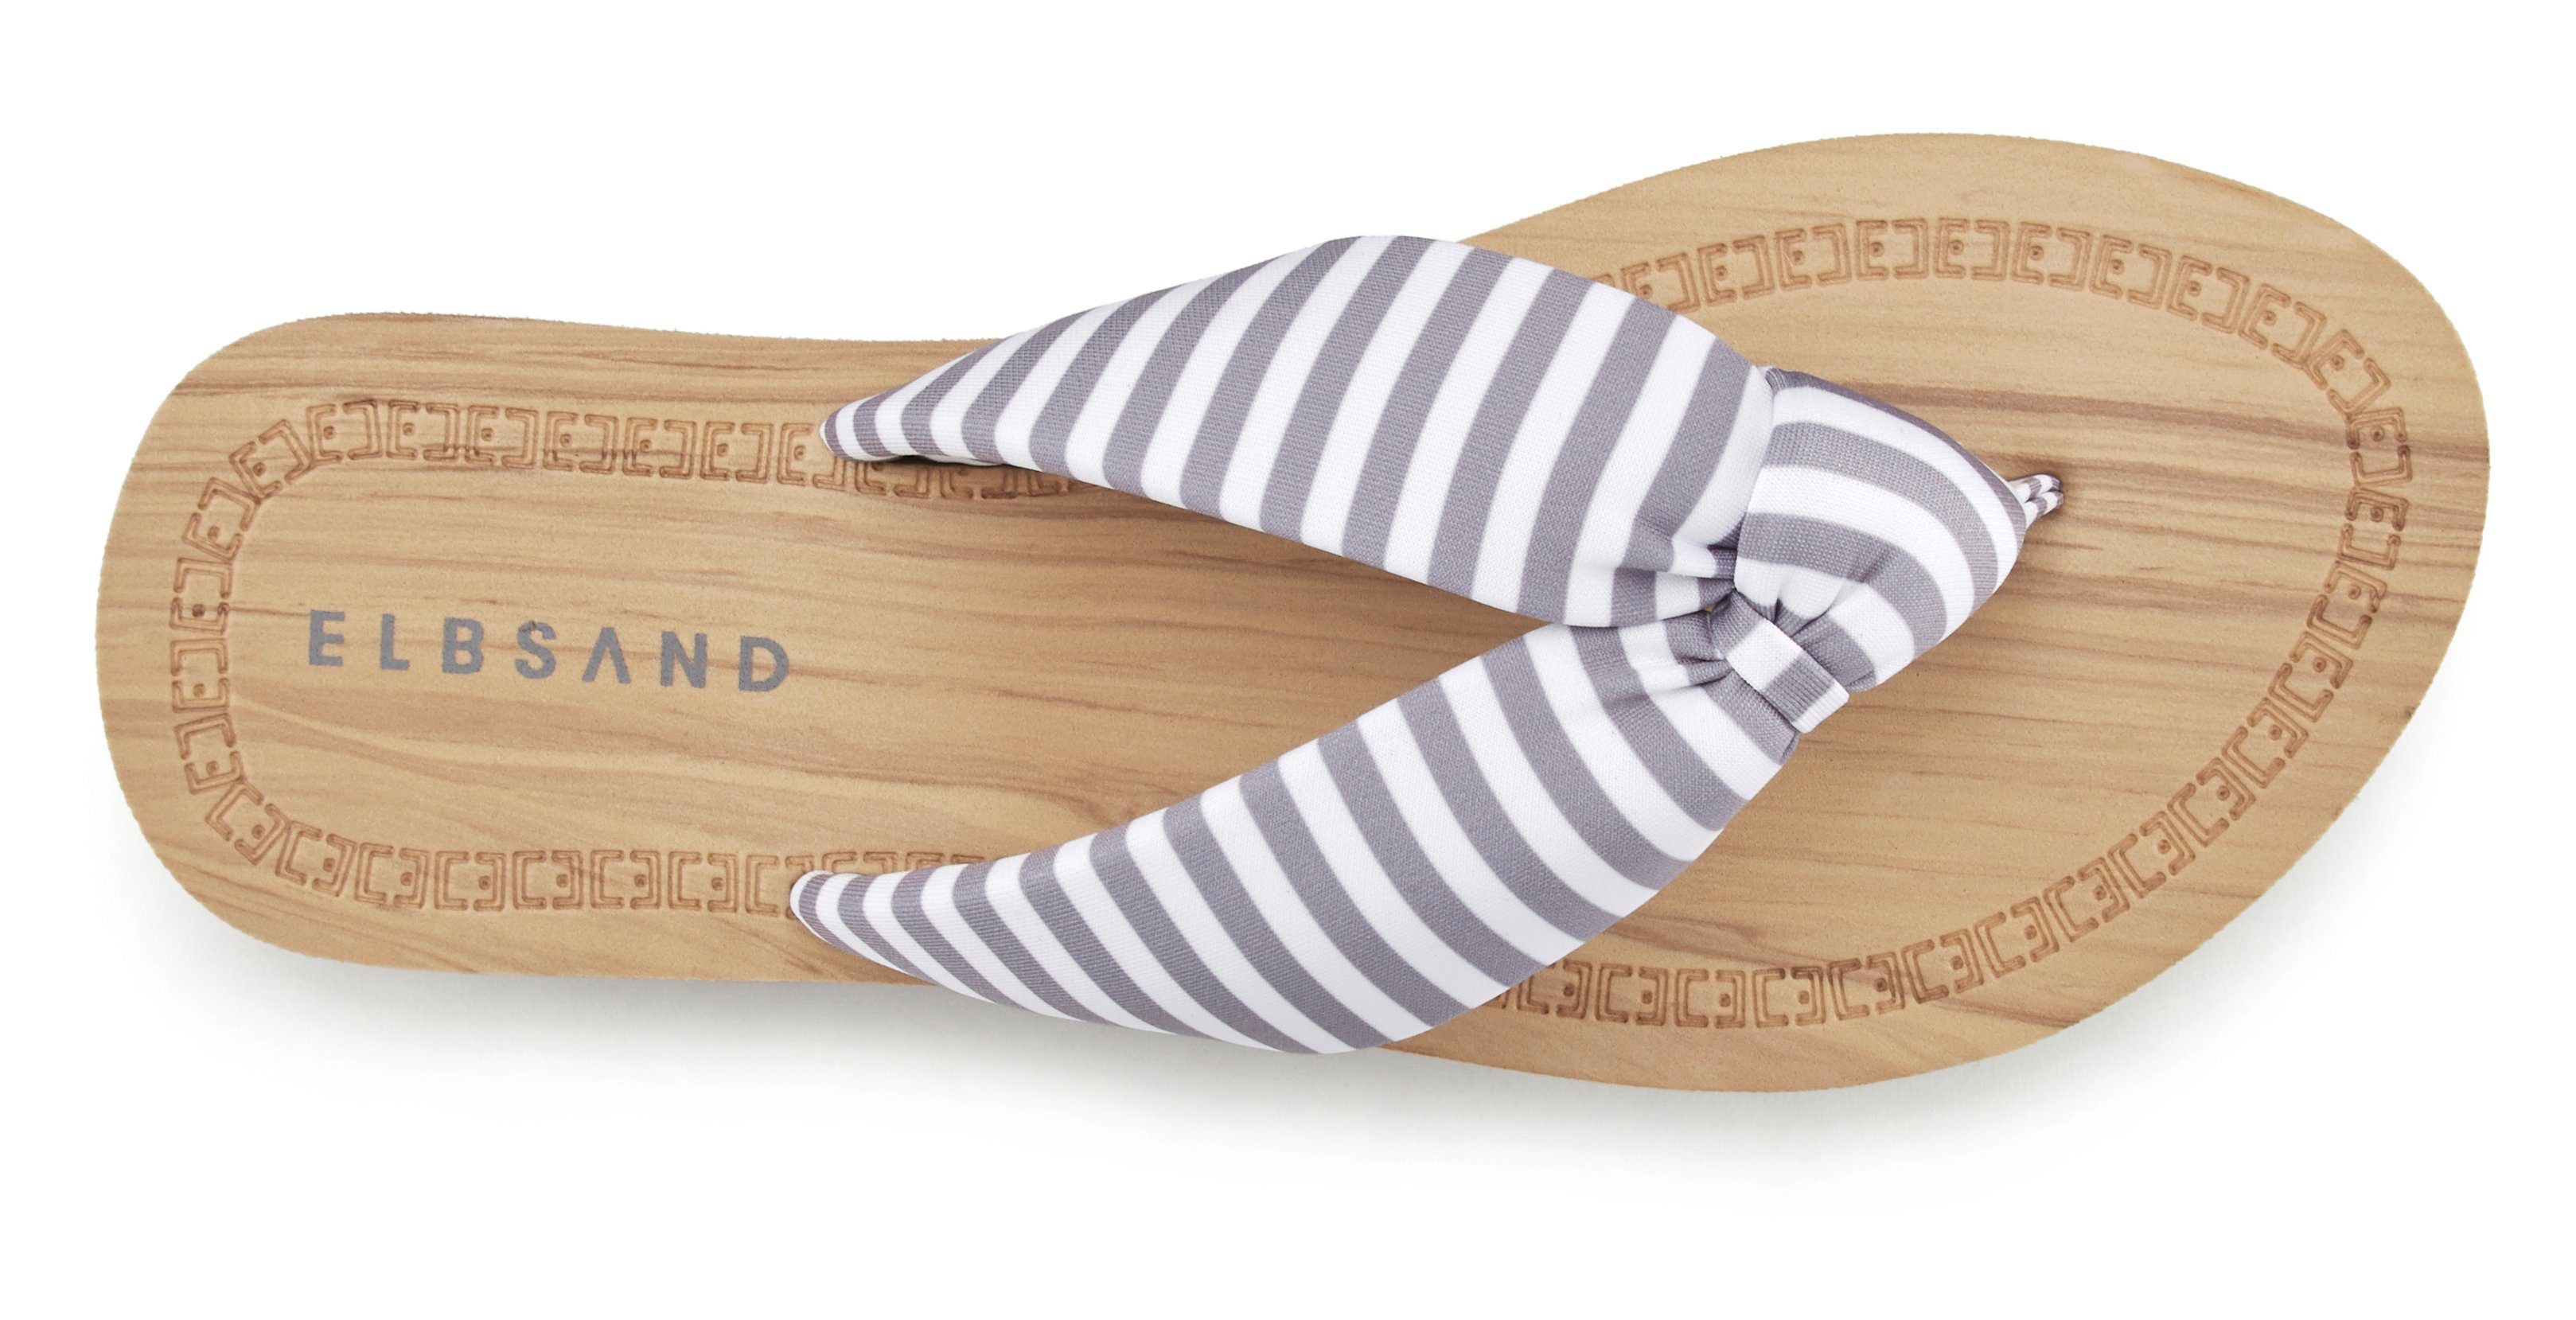 Elbsand Badezehentrenner Sandale, Pantolette, hellgrau-gestreift ultraleicht VEGAN Badeschuh